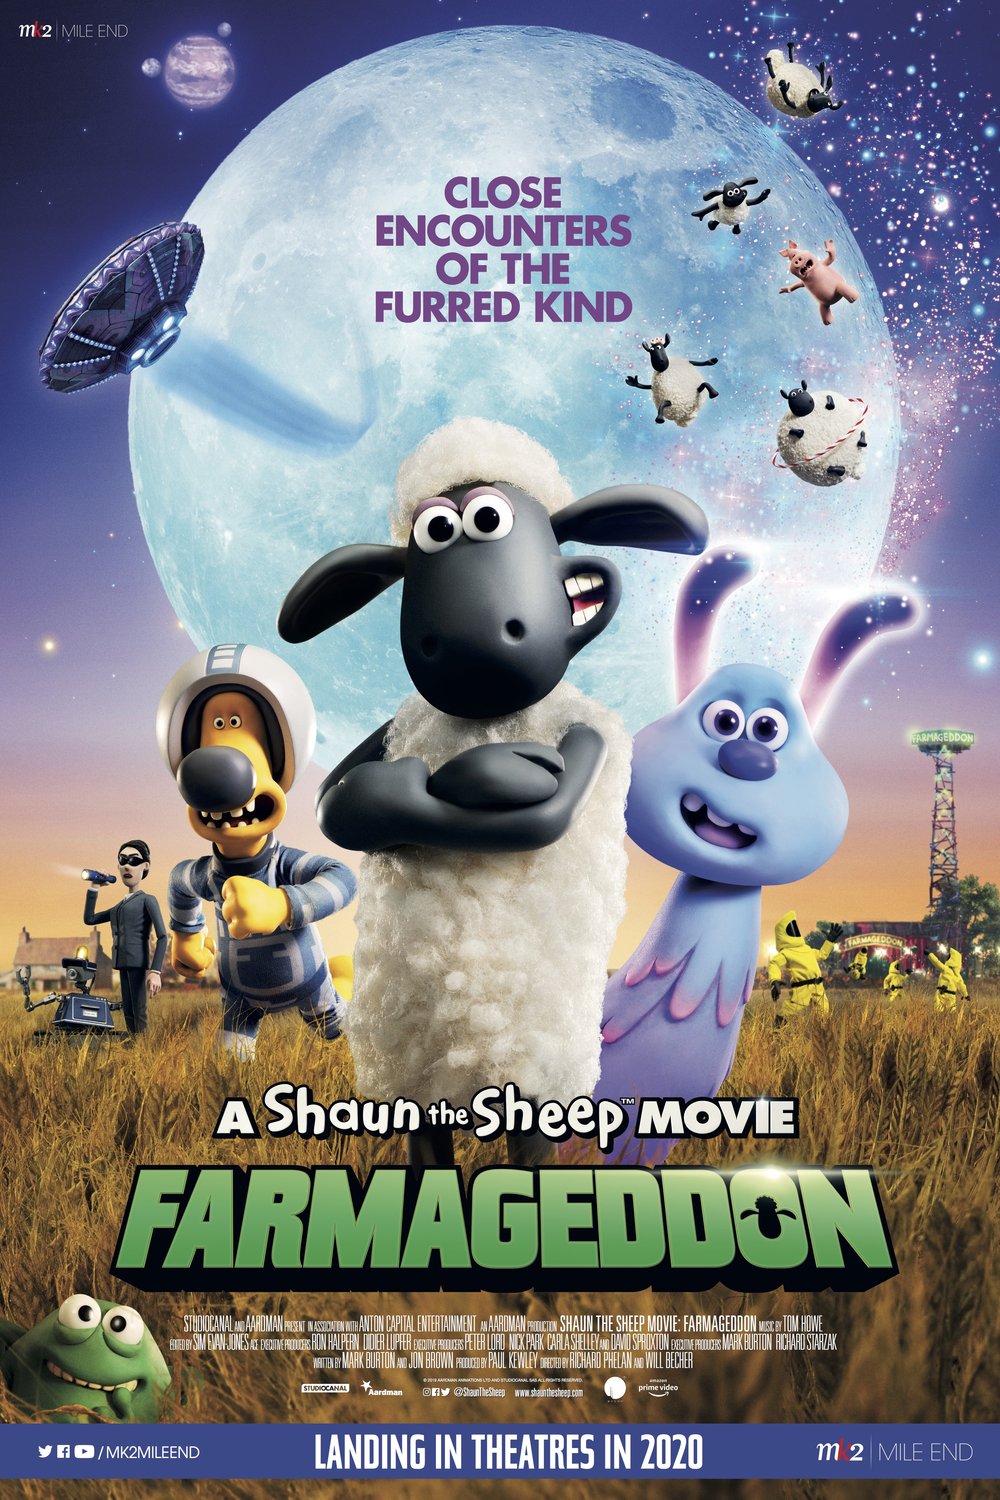 Poster of the movie A Shaun the Sheep Movie: Farmageddon